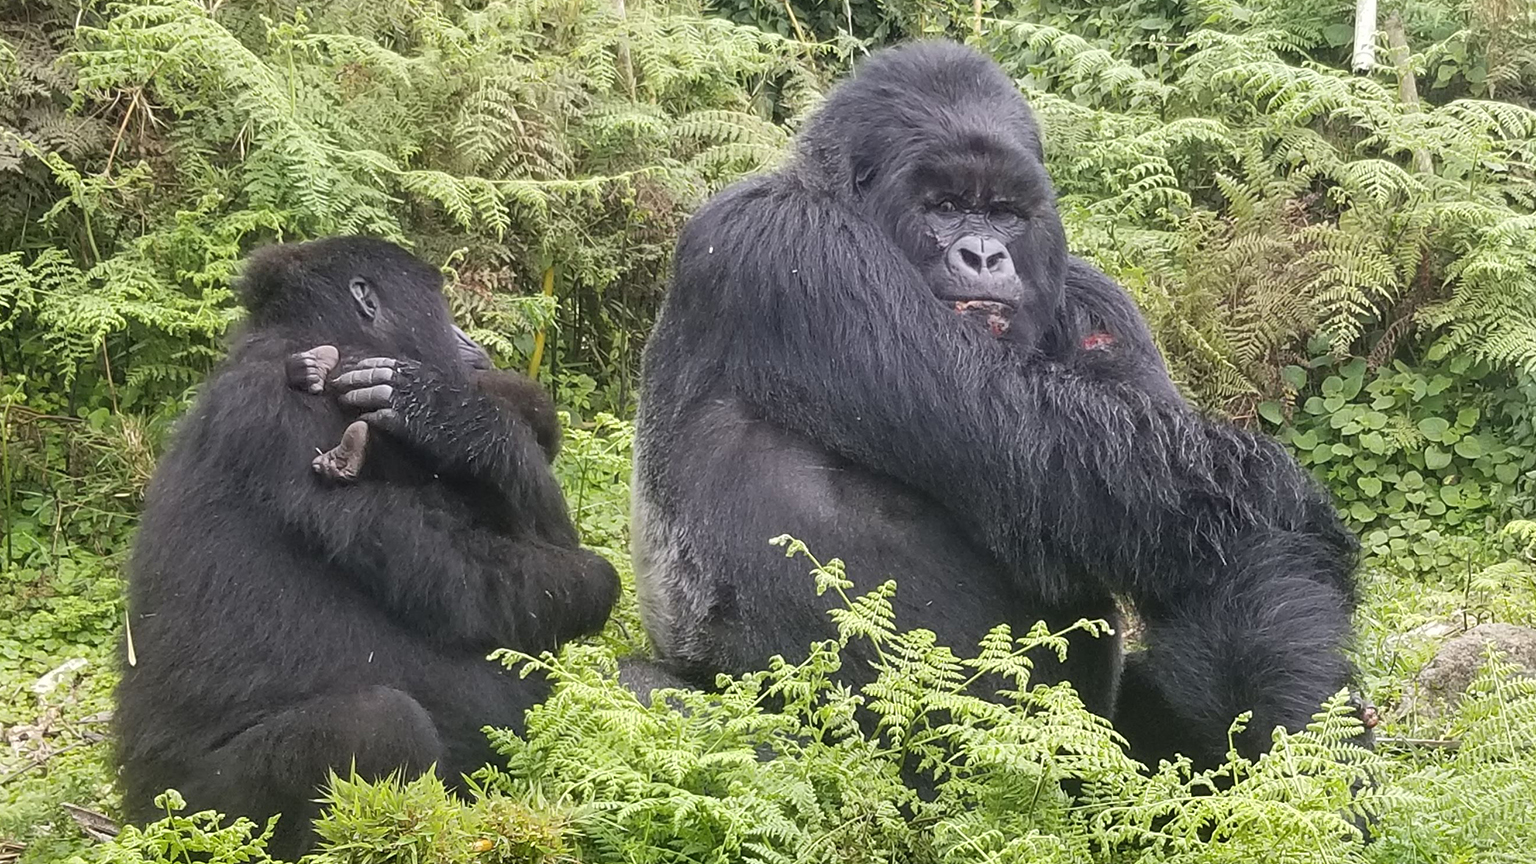 An image of gorillas.